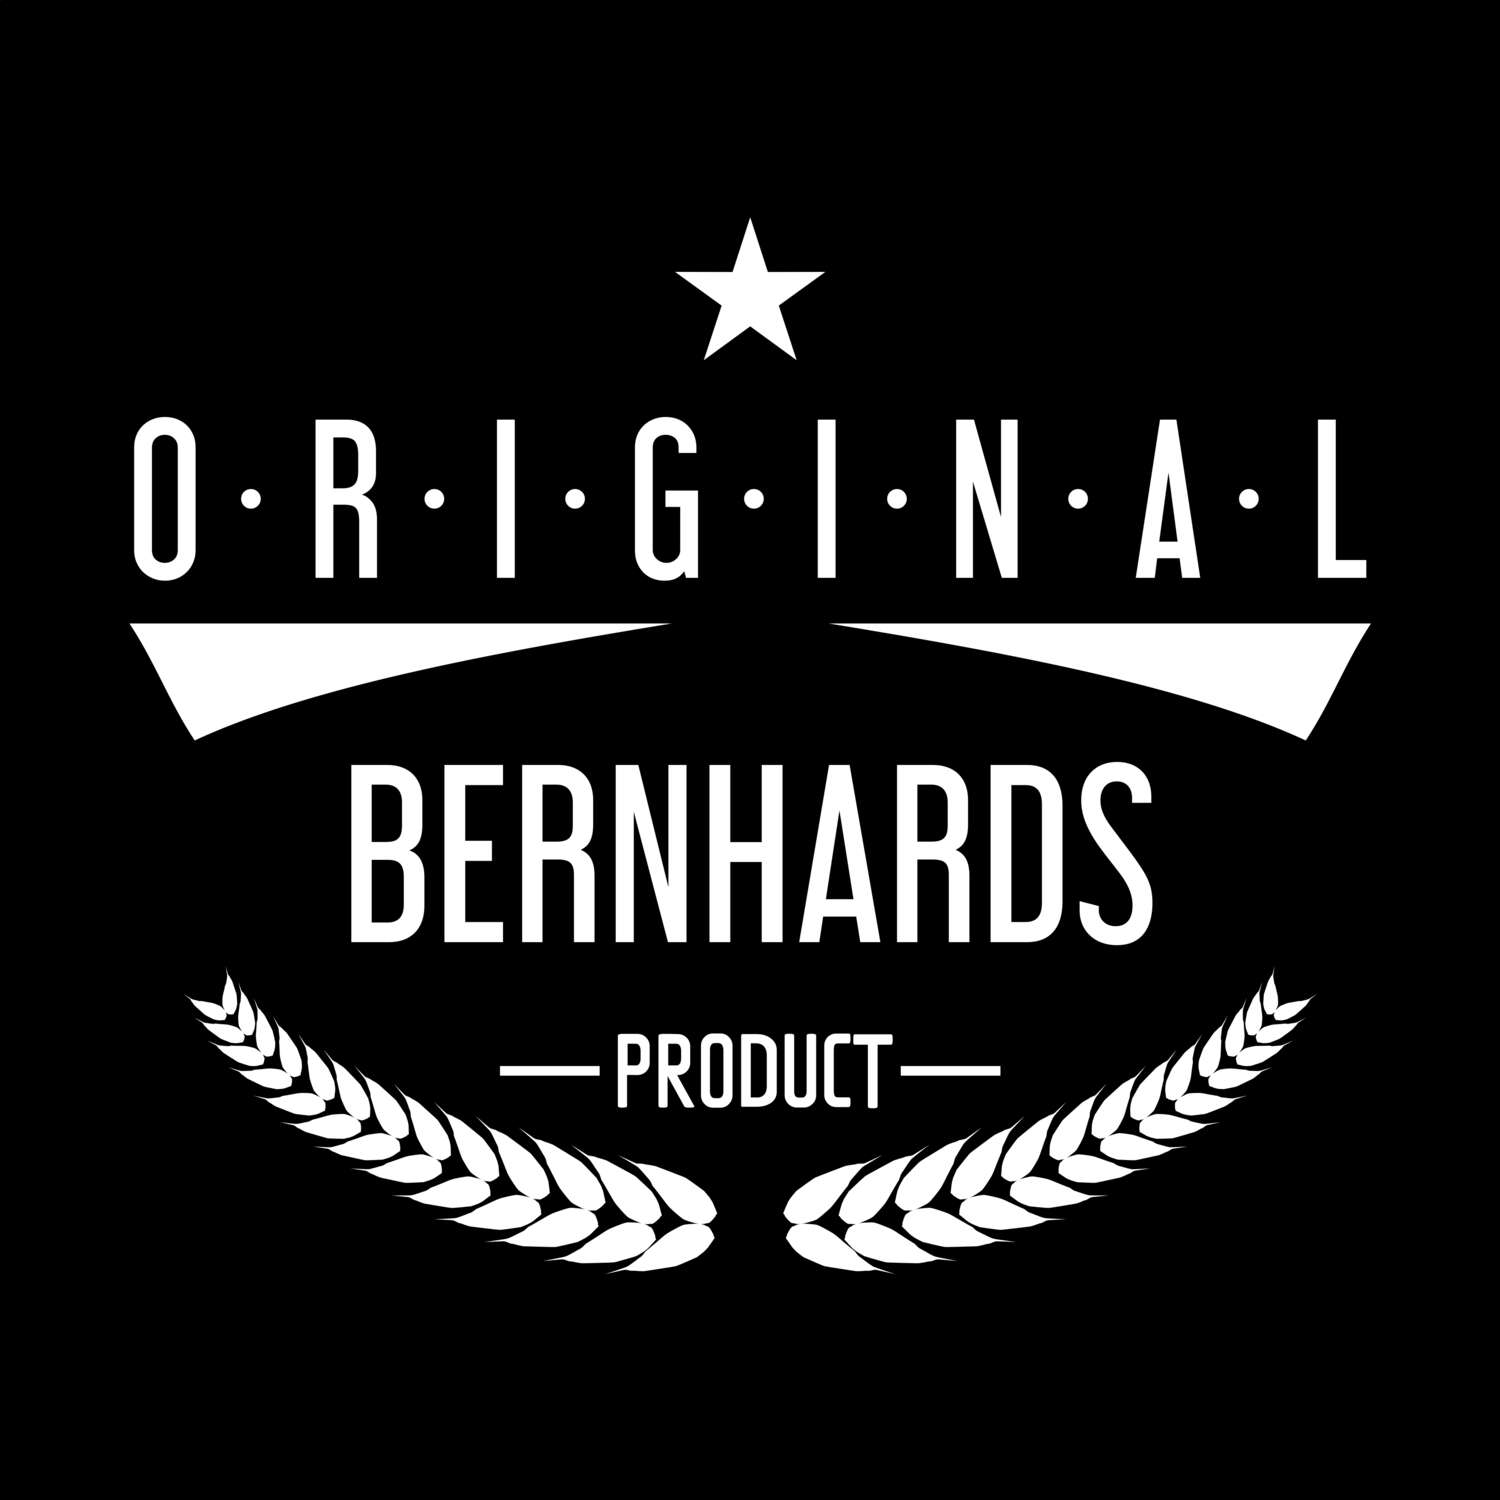 Bernhards T-Shirt »Original Product«